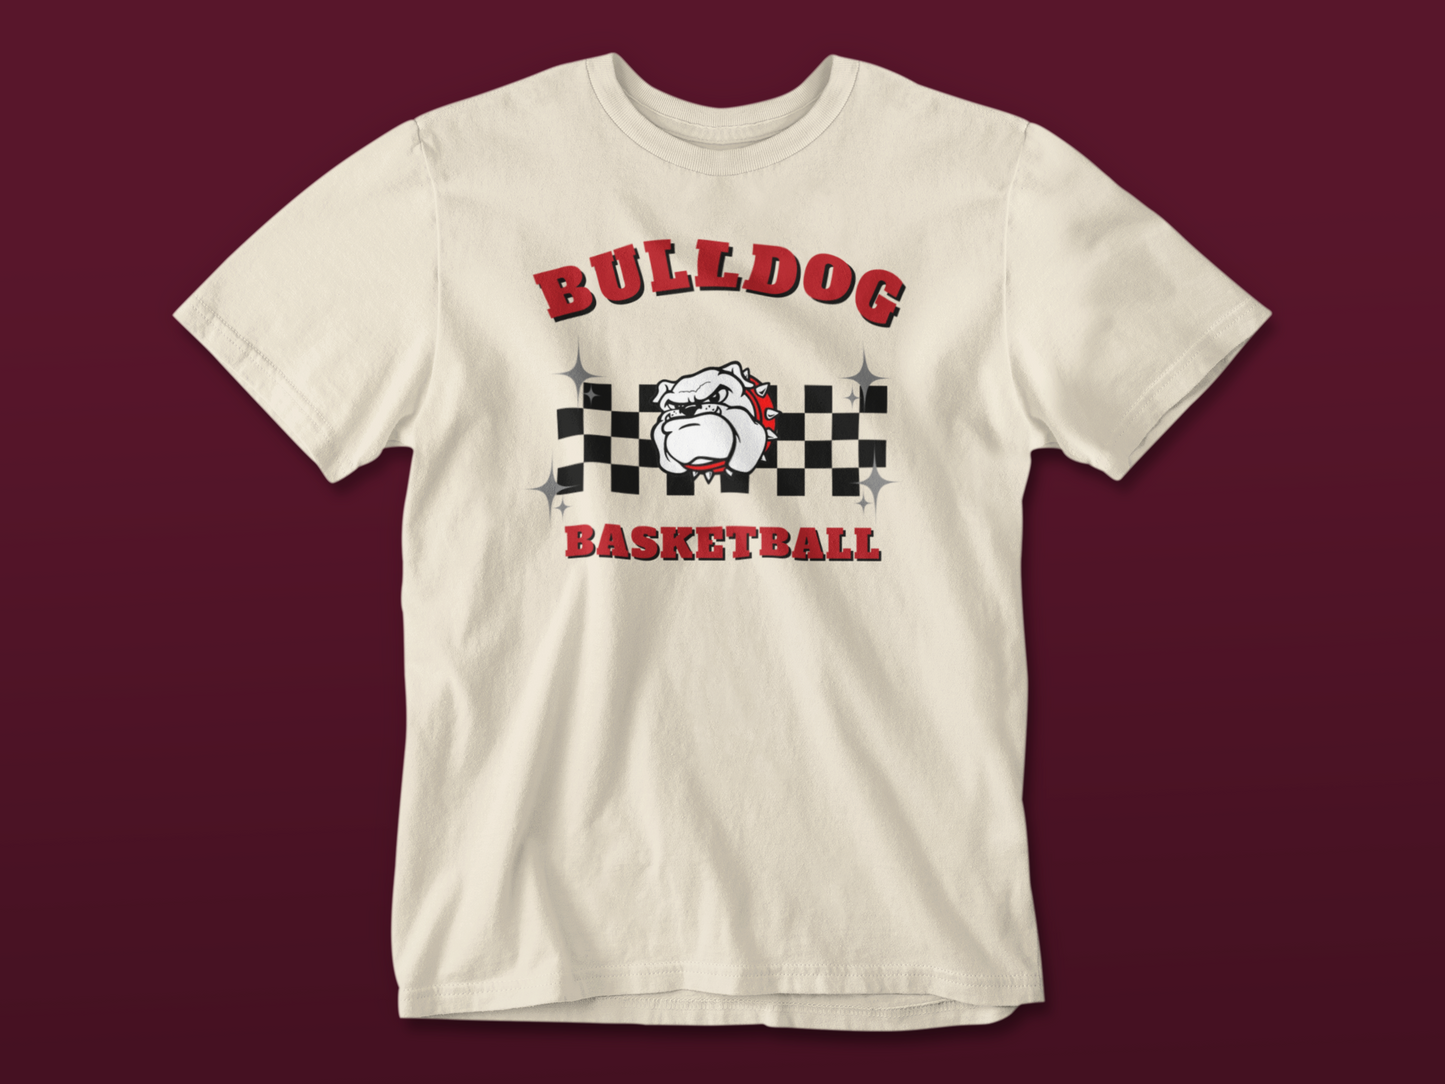 Retro Bulldog Basketball Tee